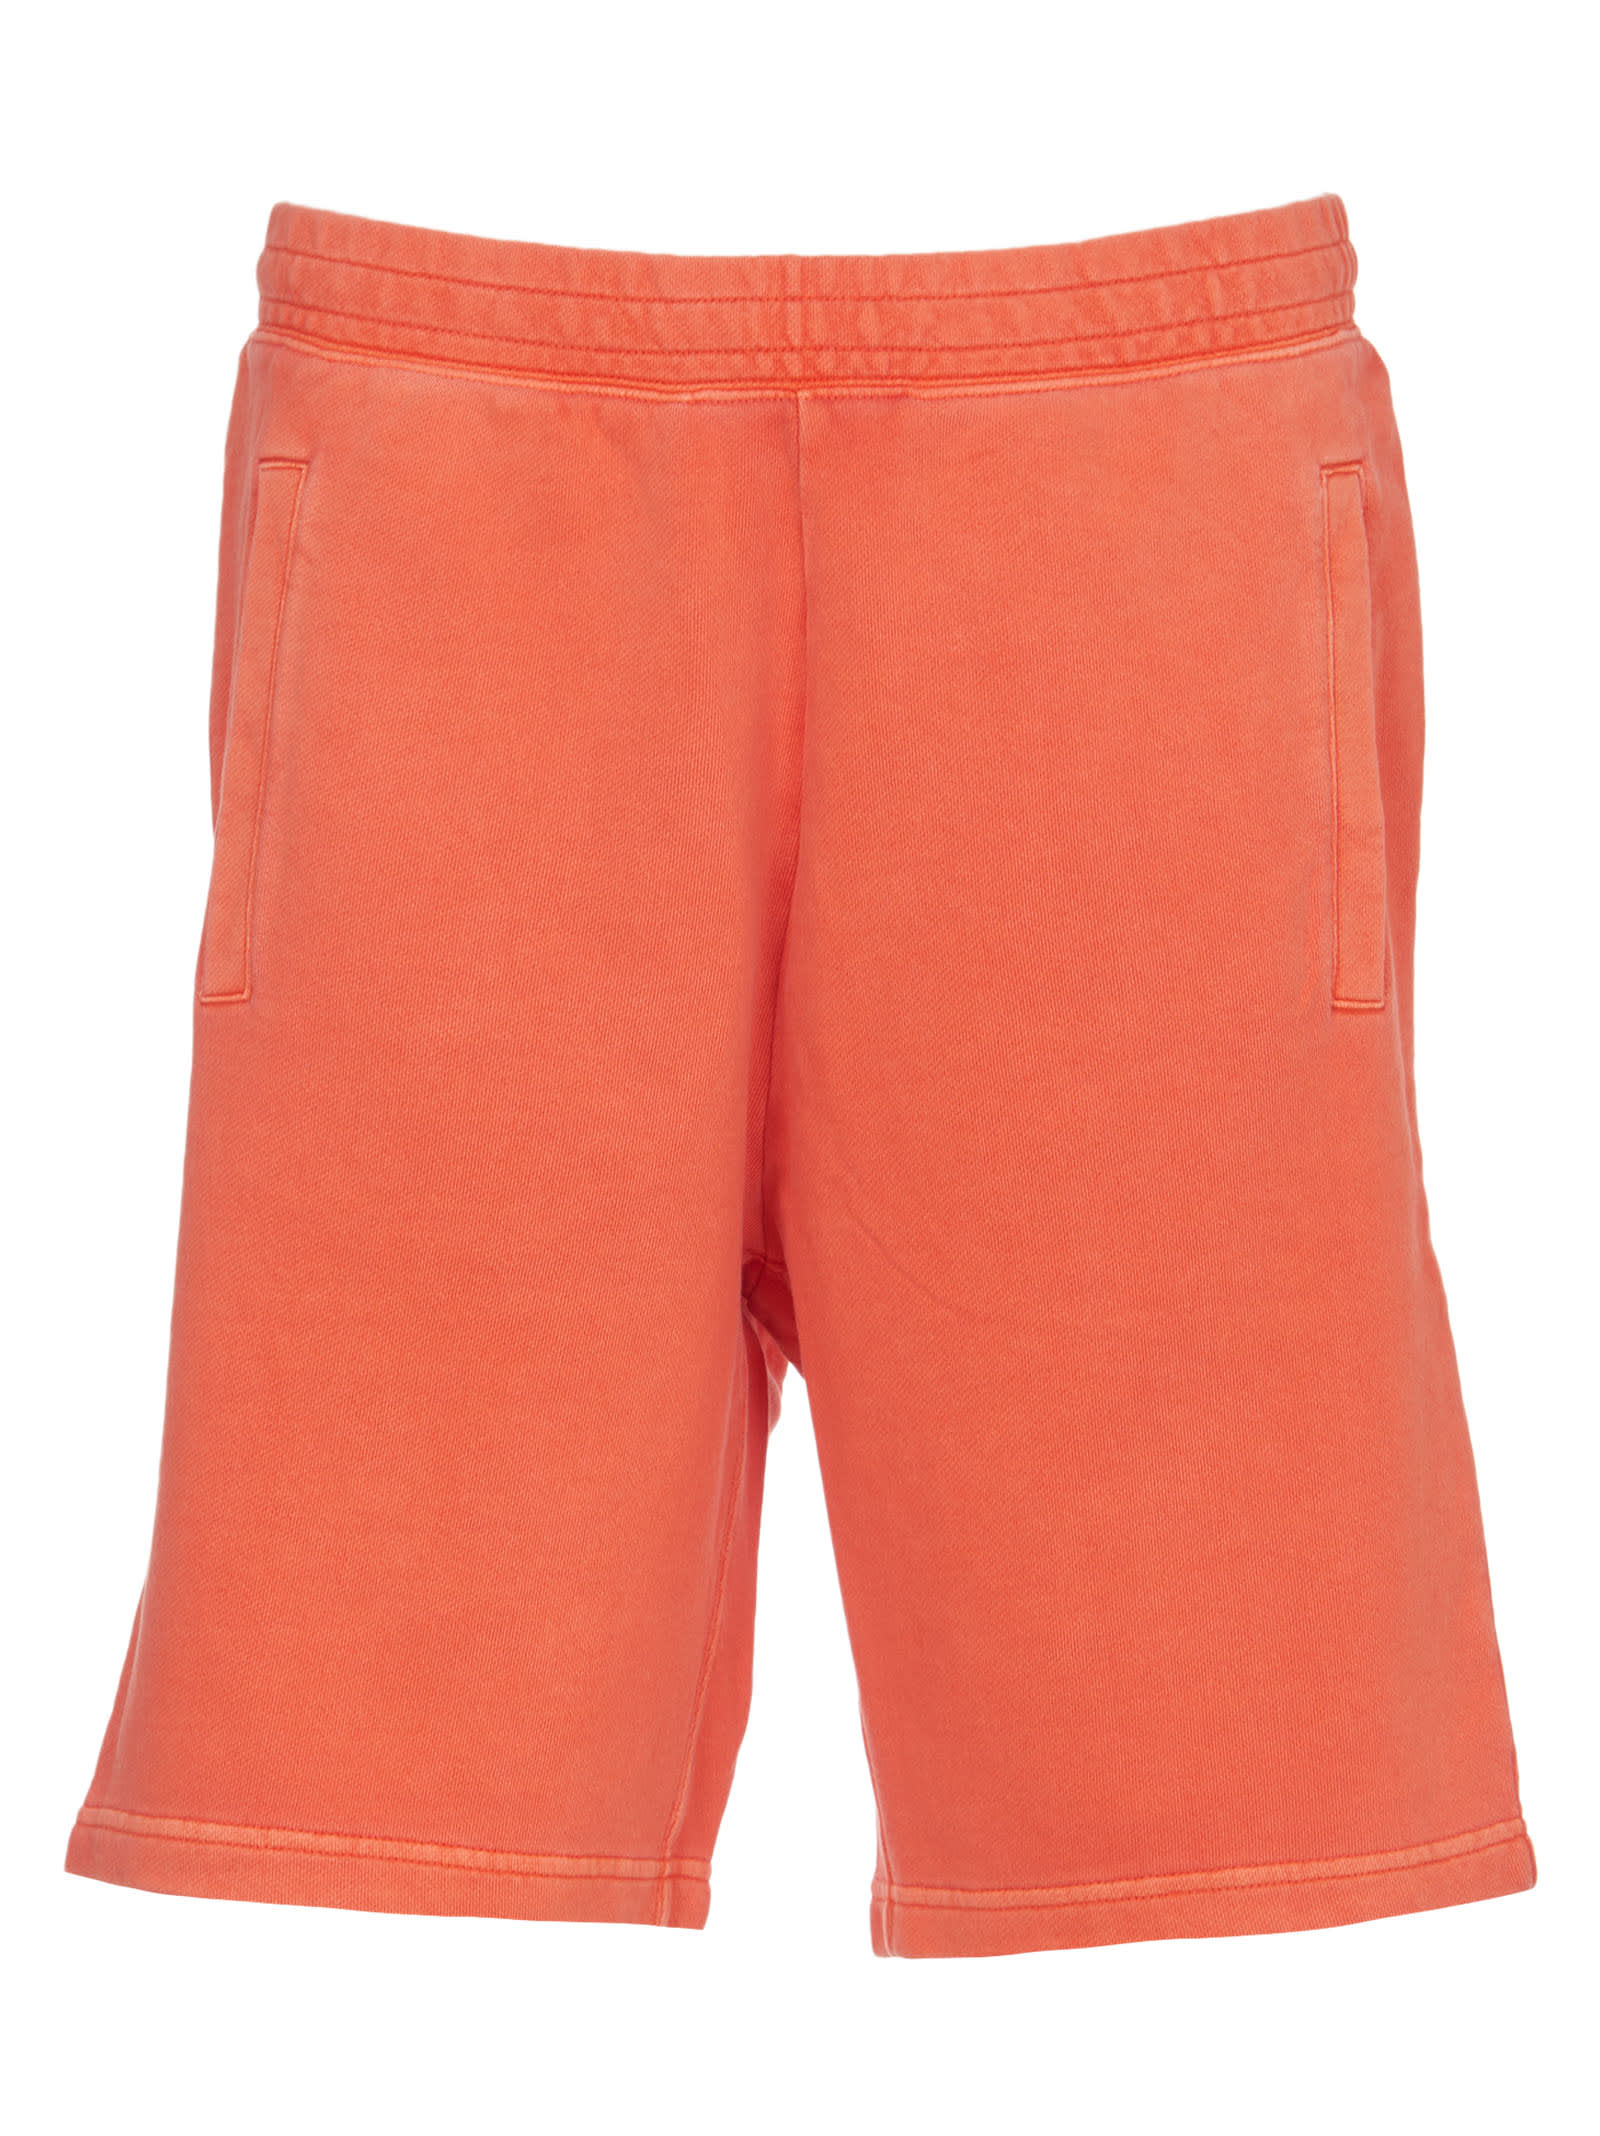 Carhartt Orange Cotton Shorts